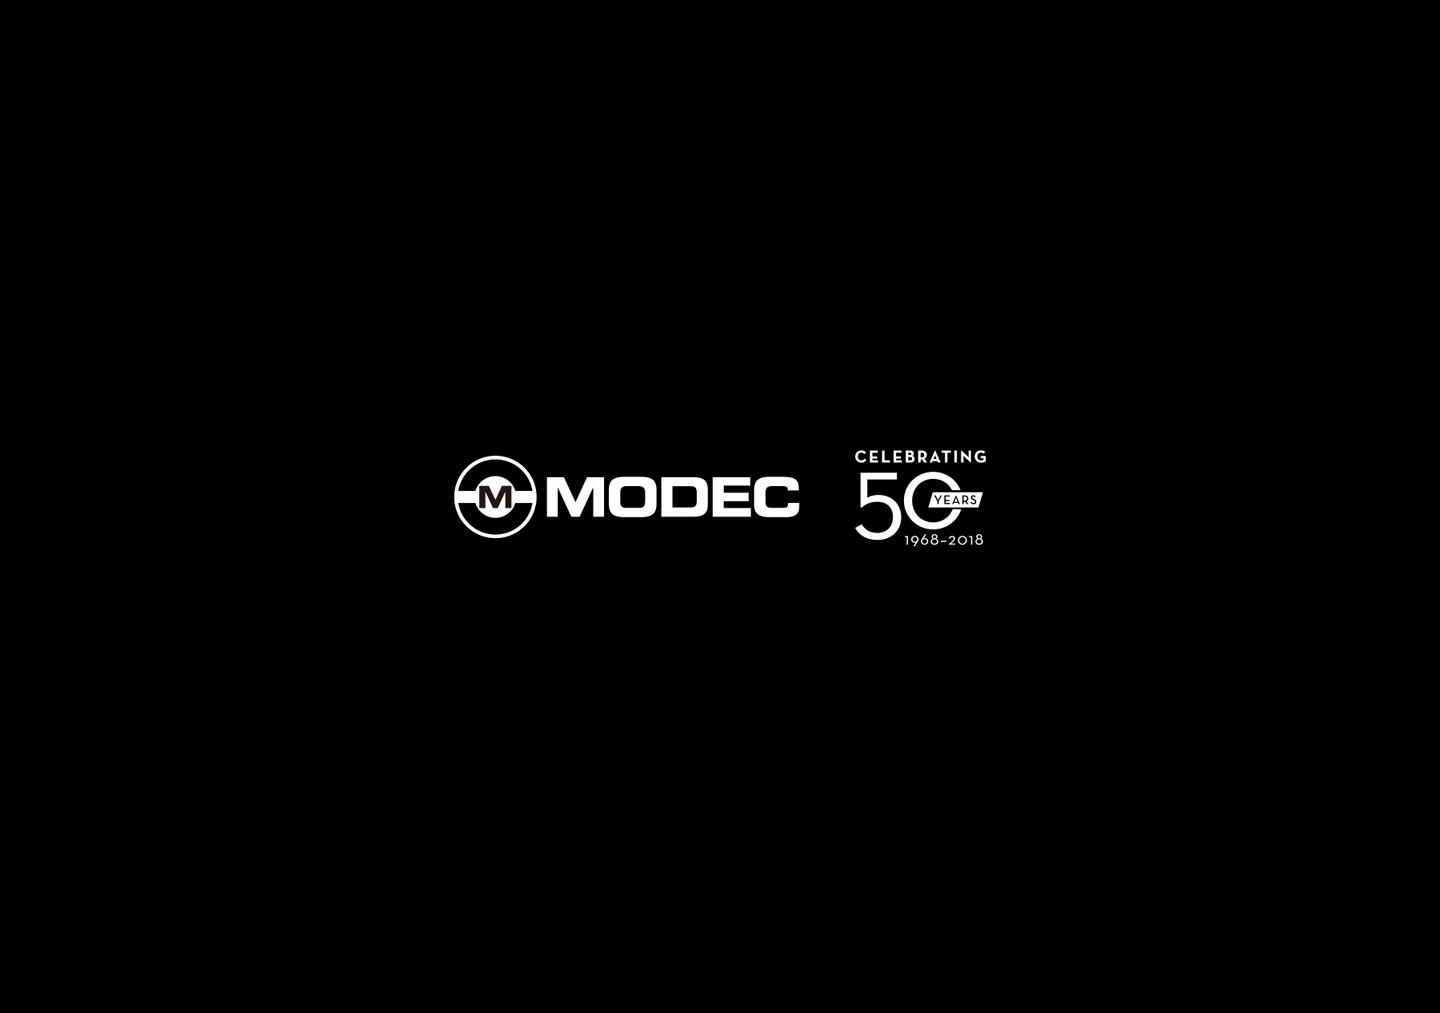 Modec Logo - MODEC 50th Anniversary Website